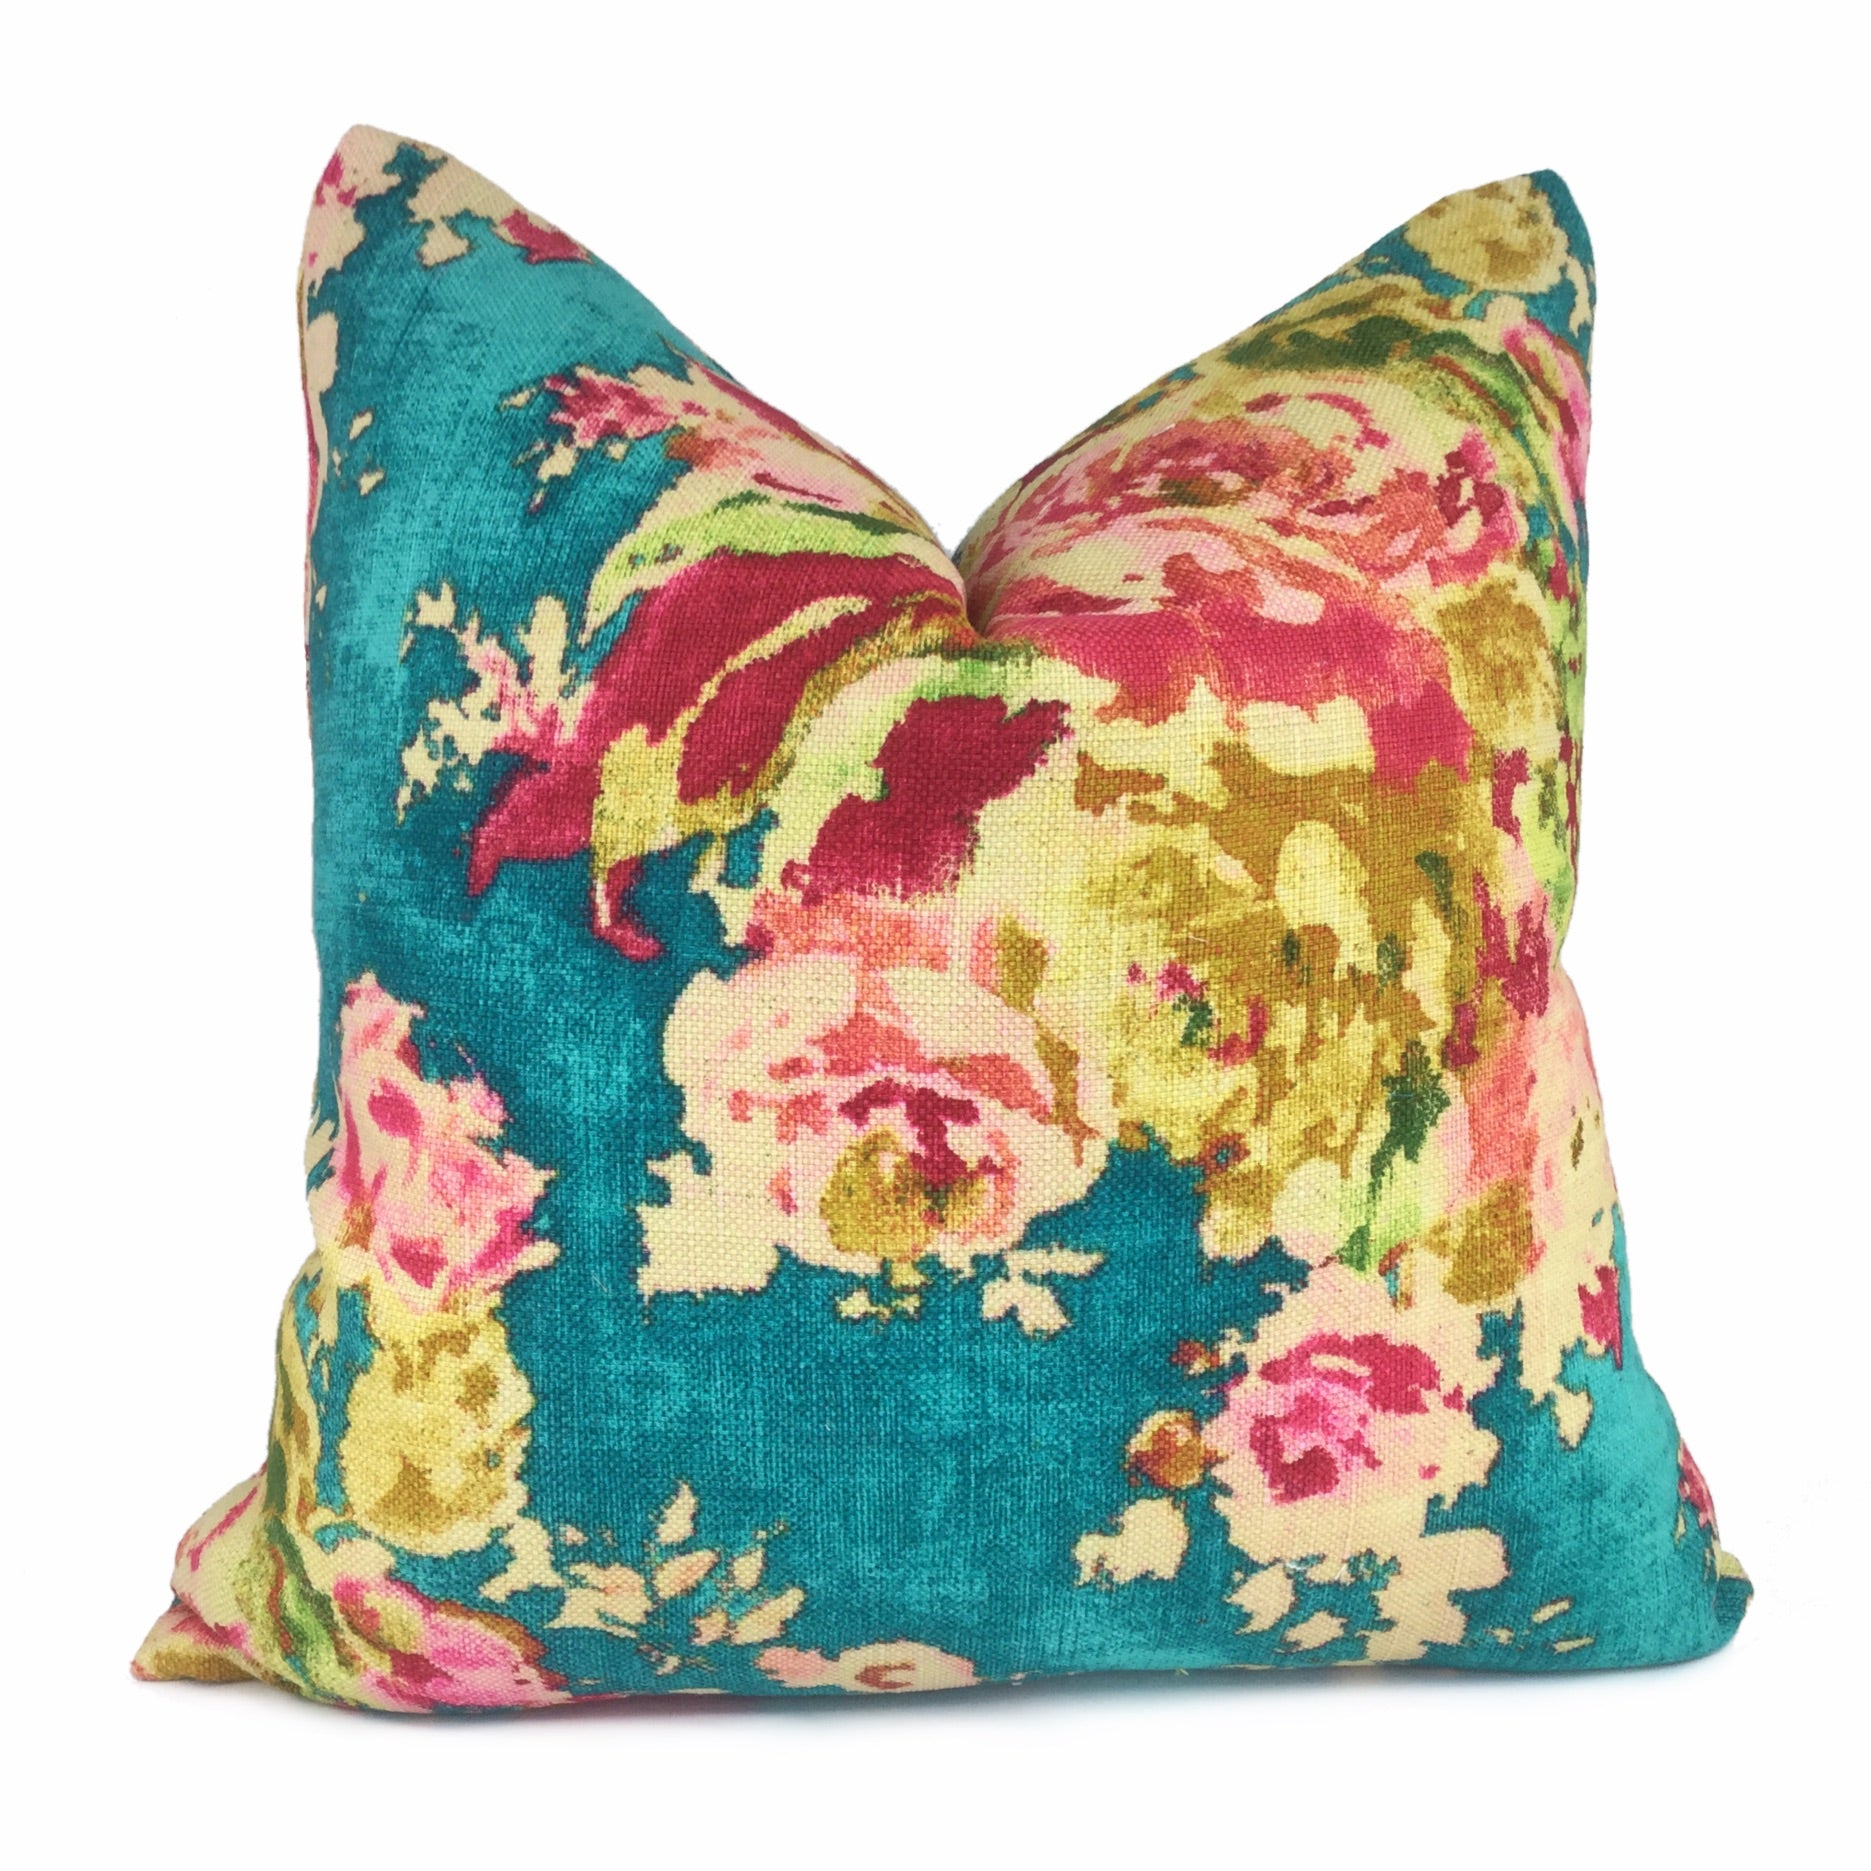 Turquoise Teal Aphrodite Floral Cotton Linen Print Pillow Cover